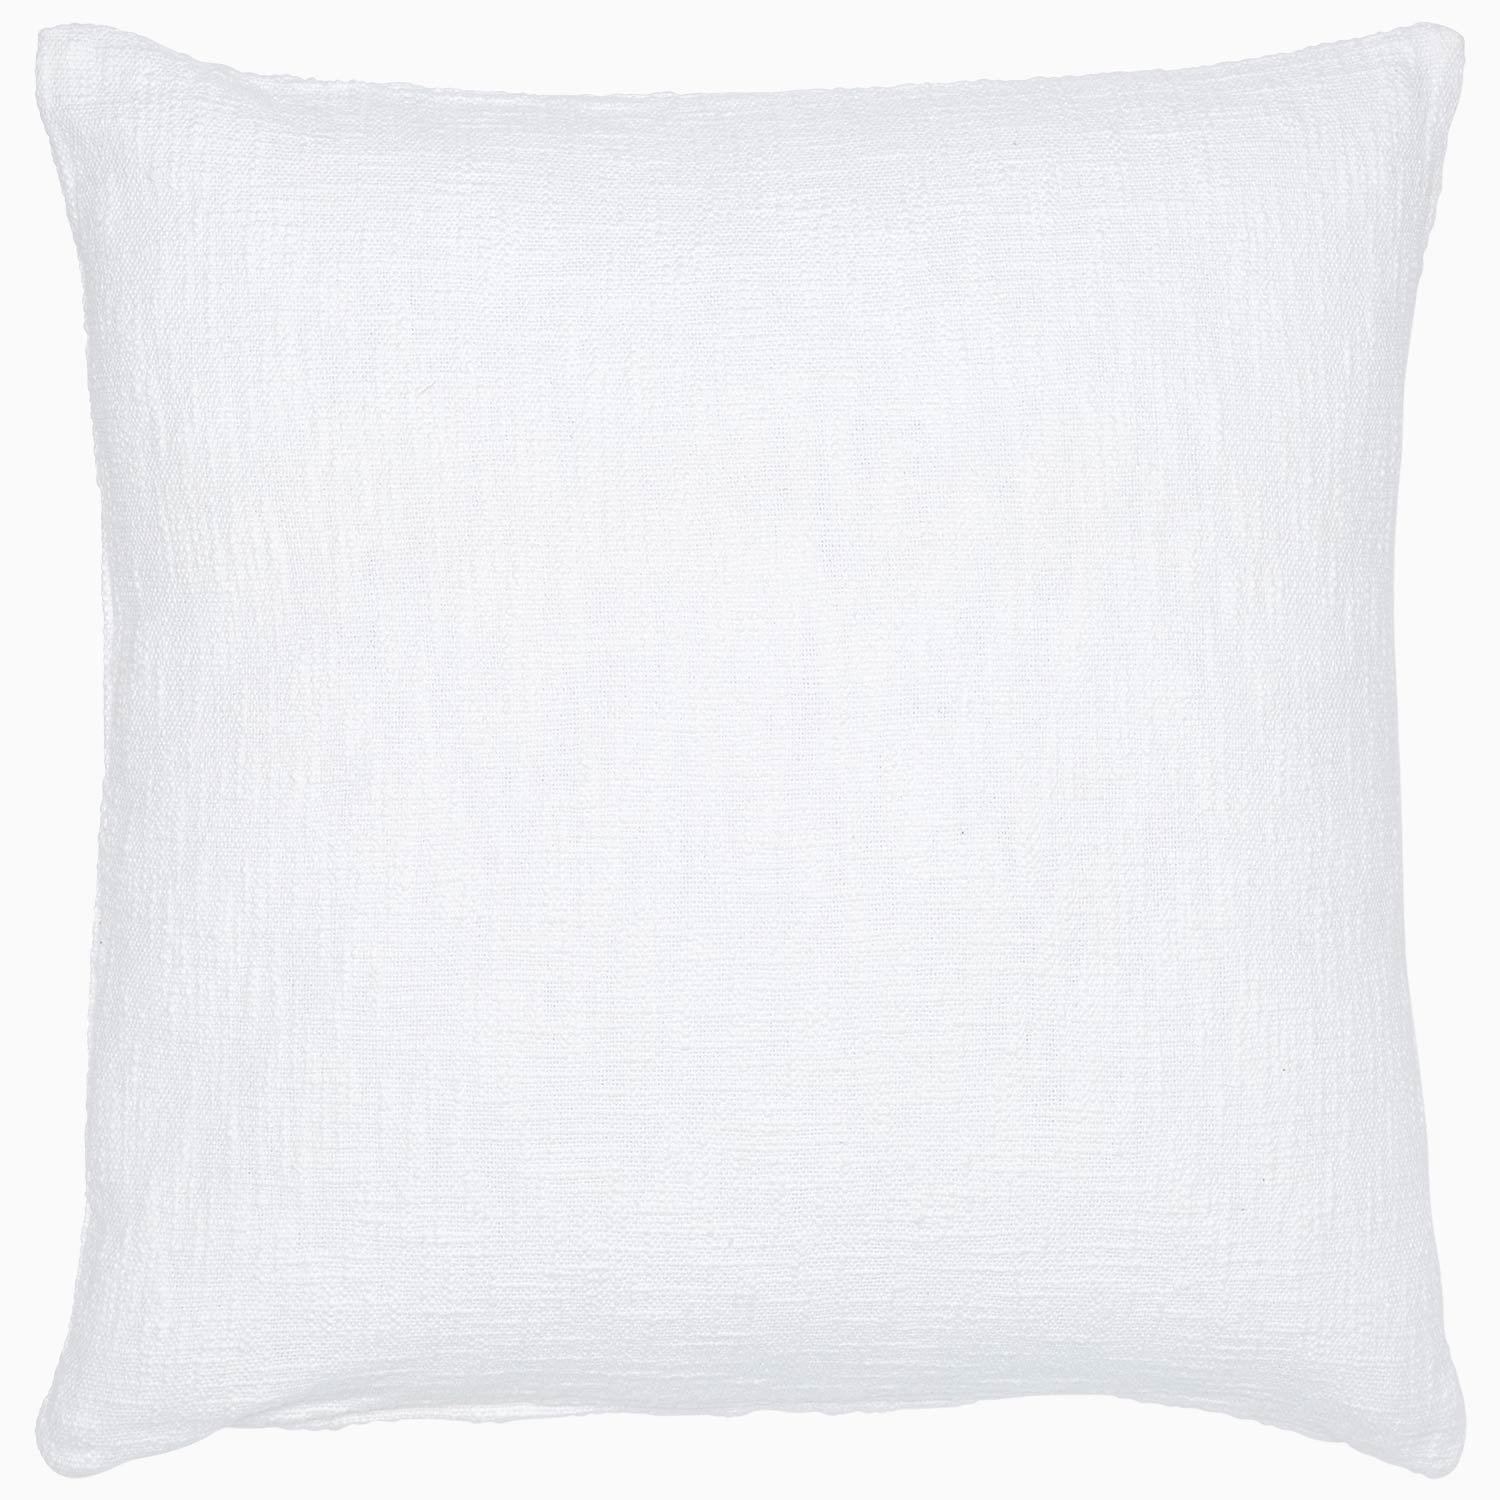 Woven White Decorative Pillow Main